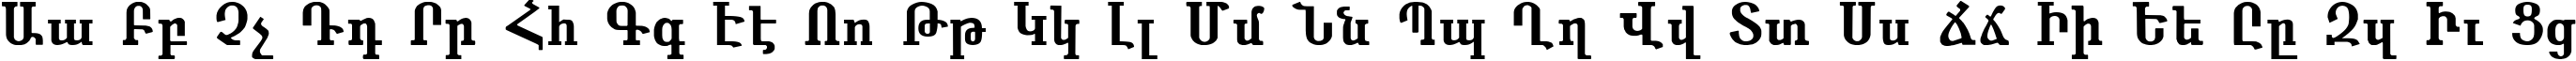 Пример написания английского алфавита шрифтом ANAHID